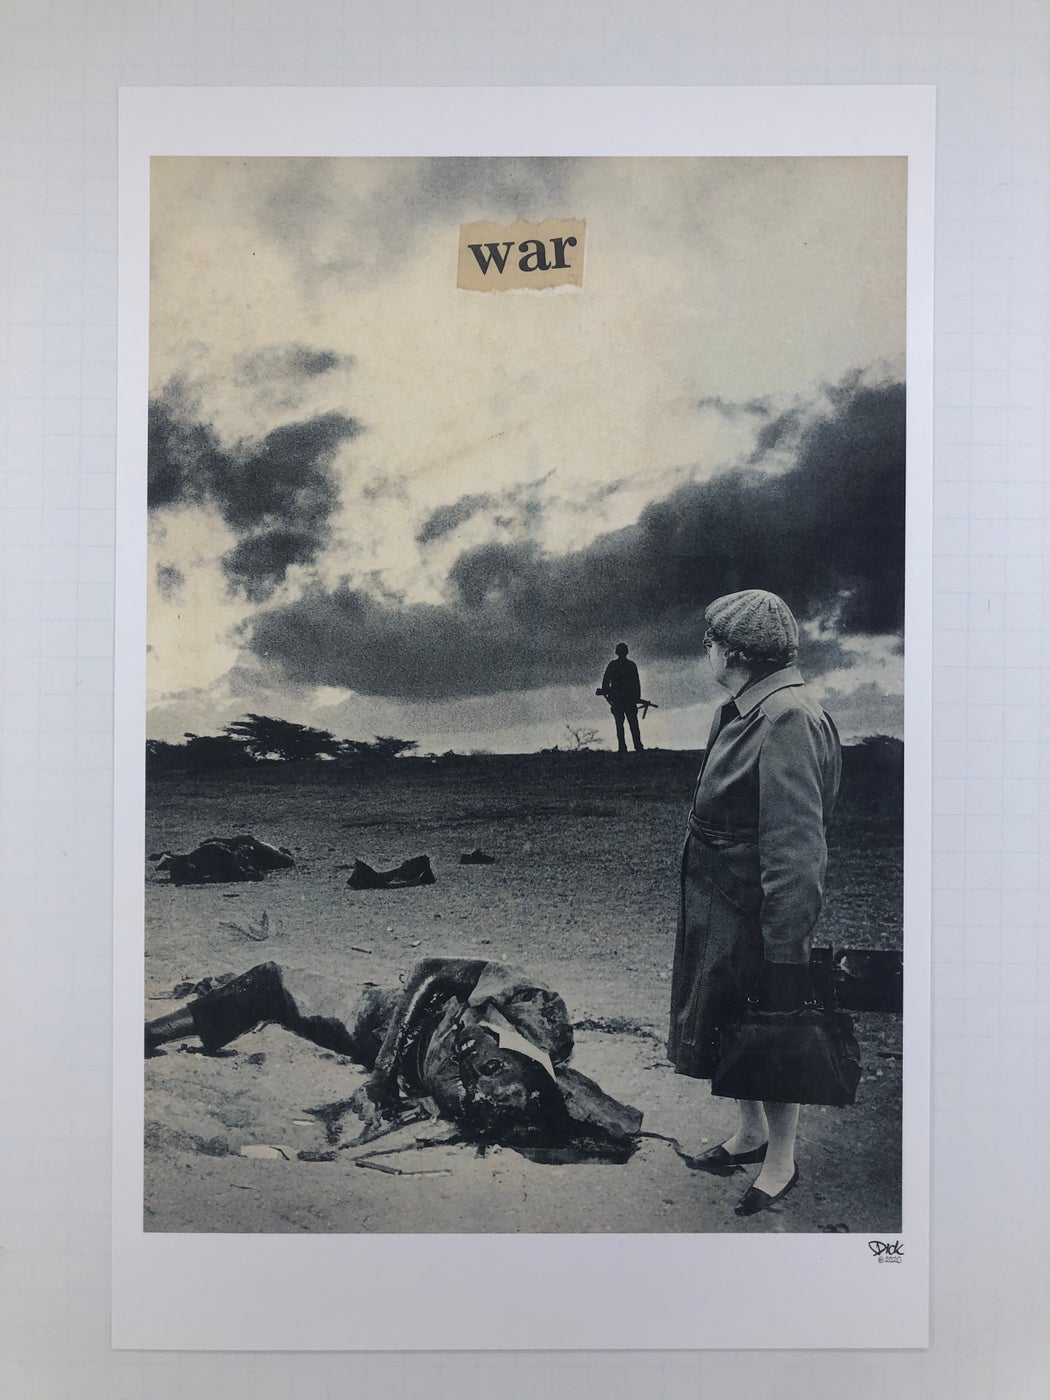 Dick Lucas "War" Print